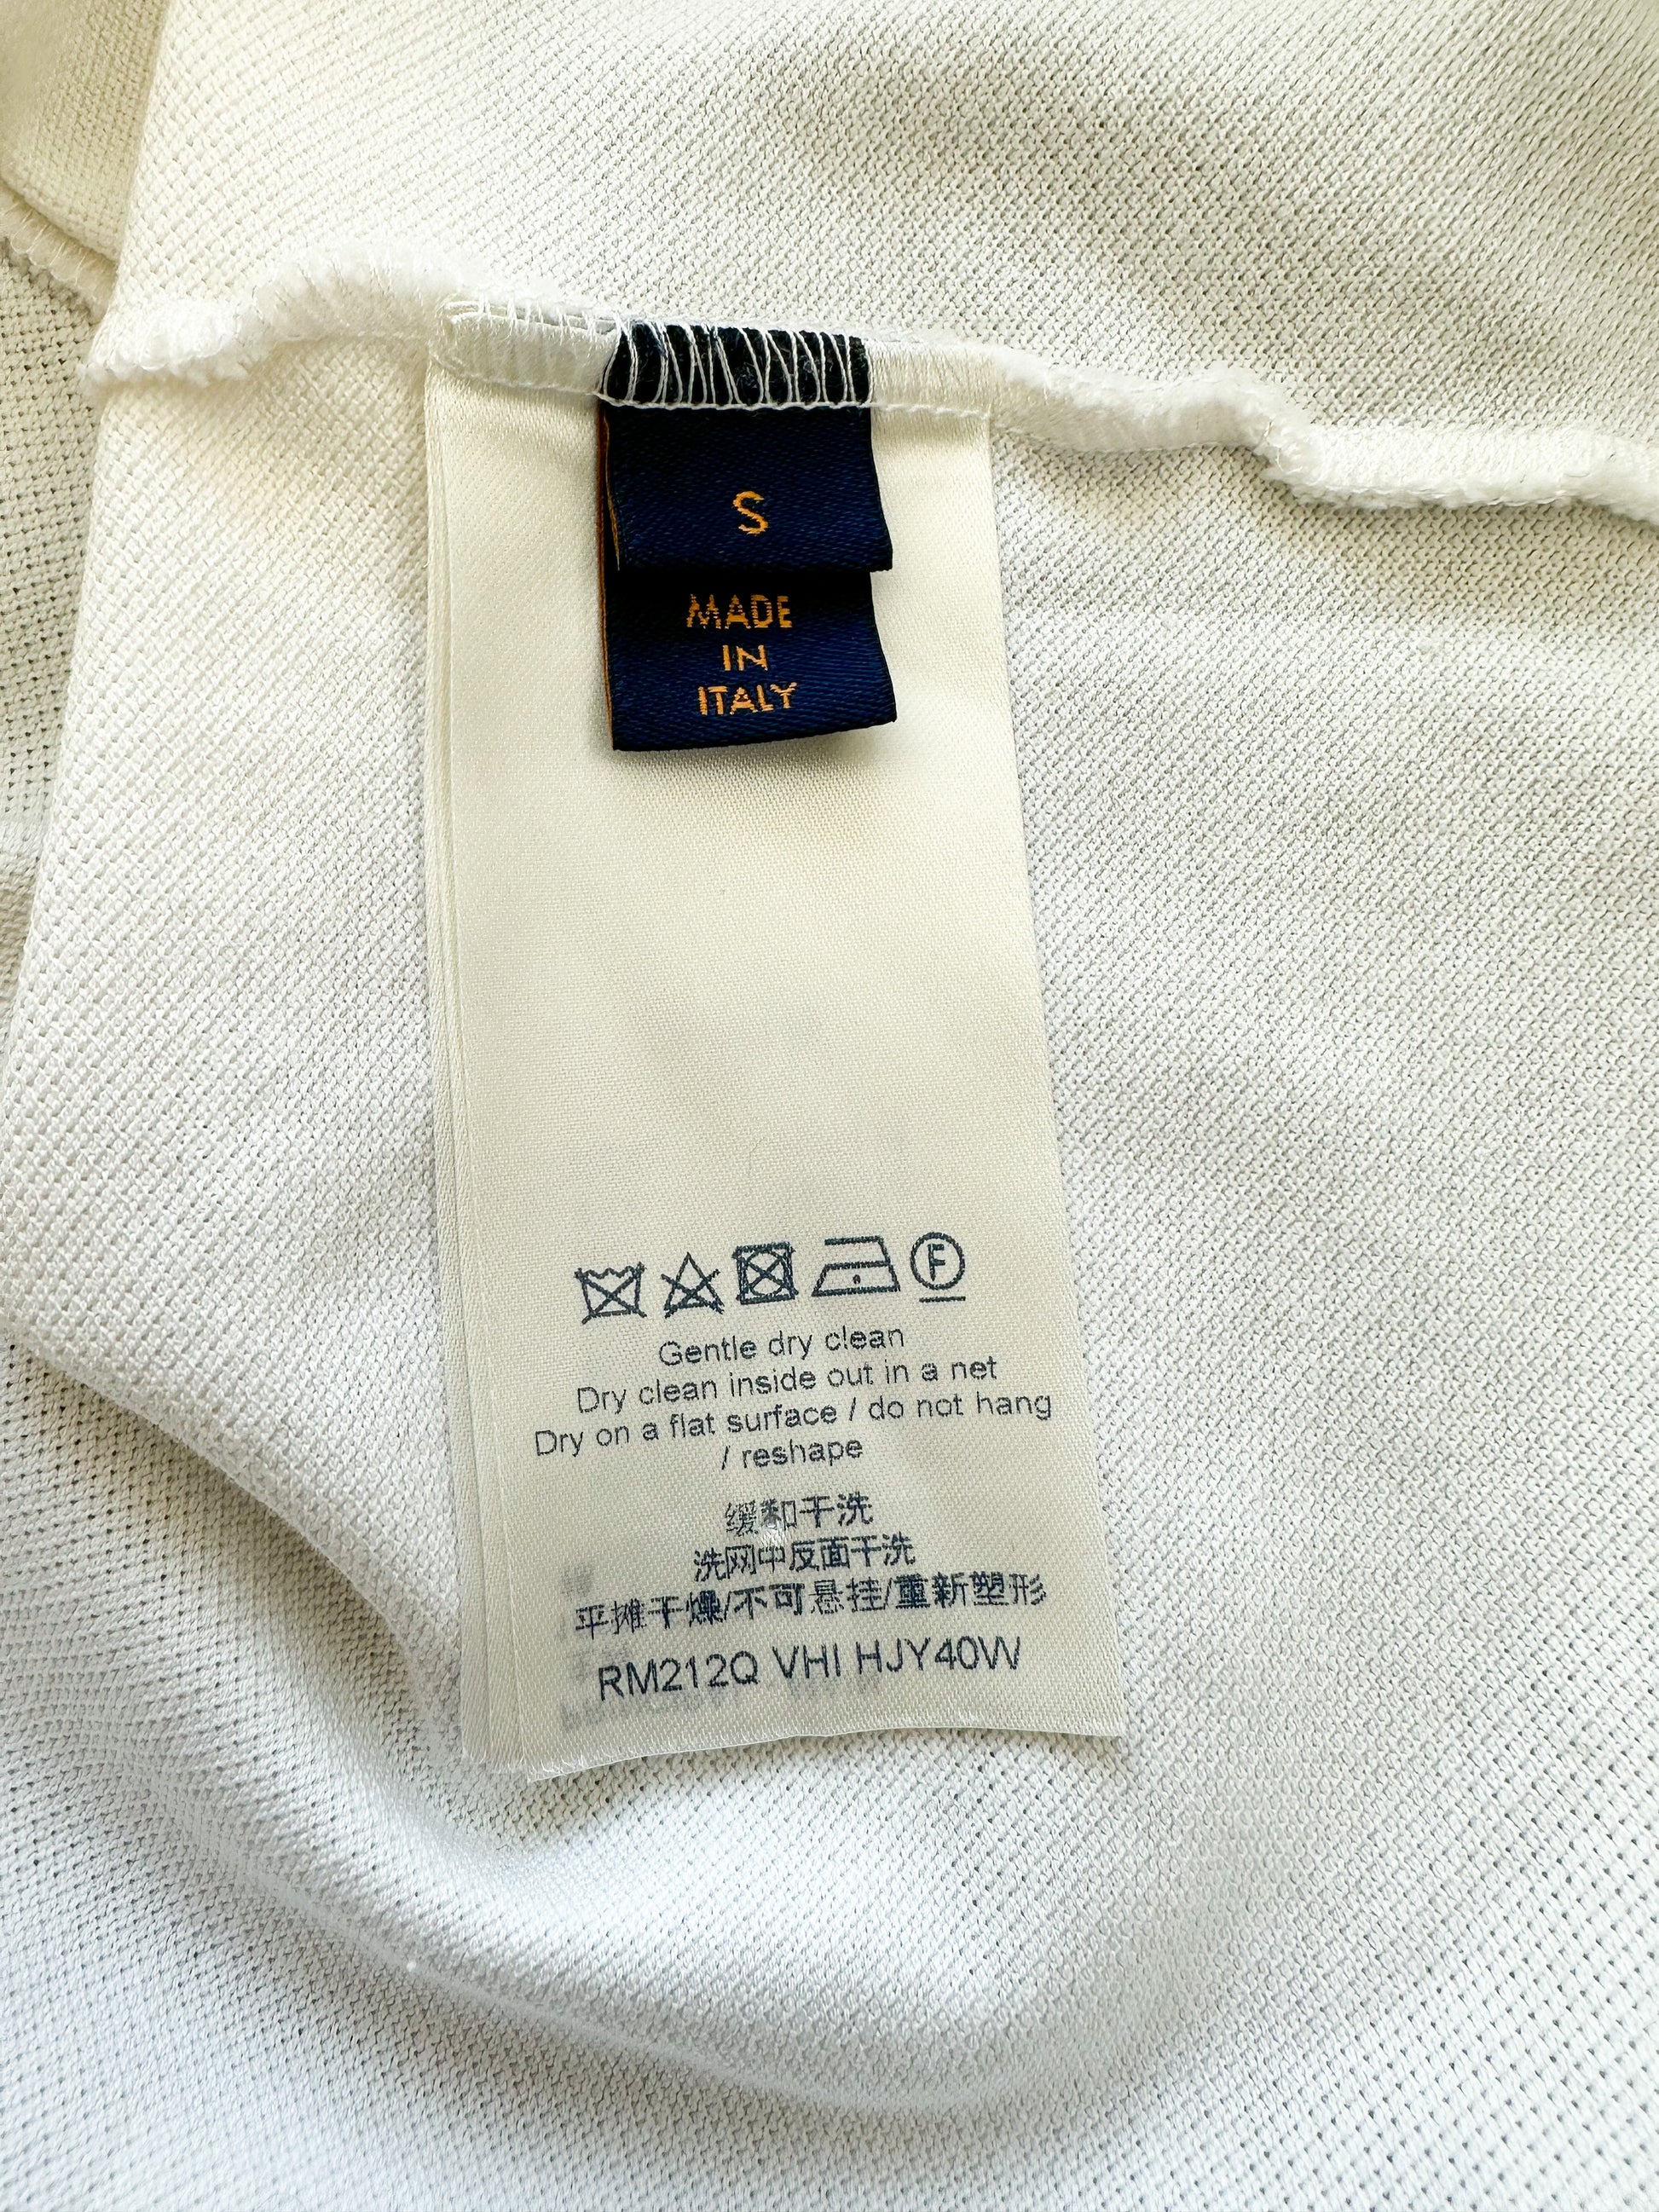 Louis Vuitton Lvse Half Damier Pocket Polo